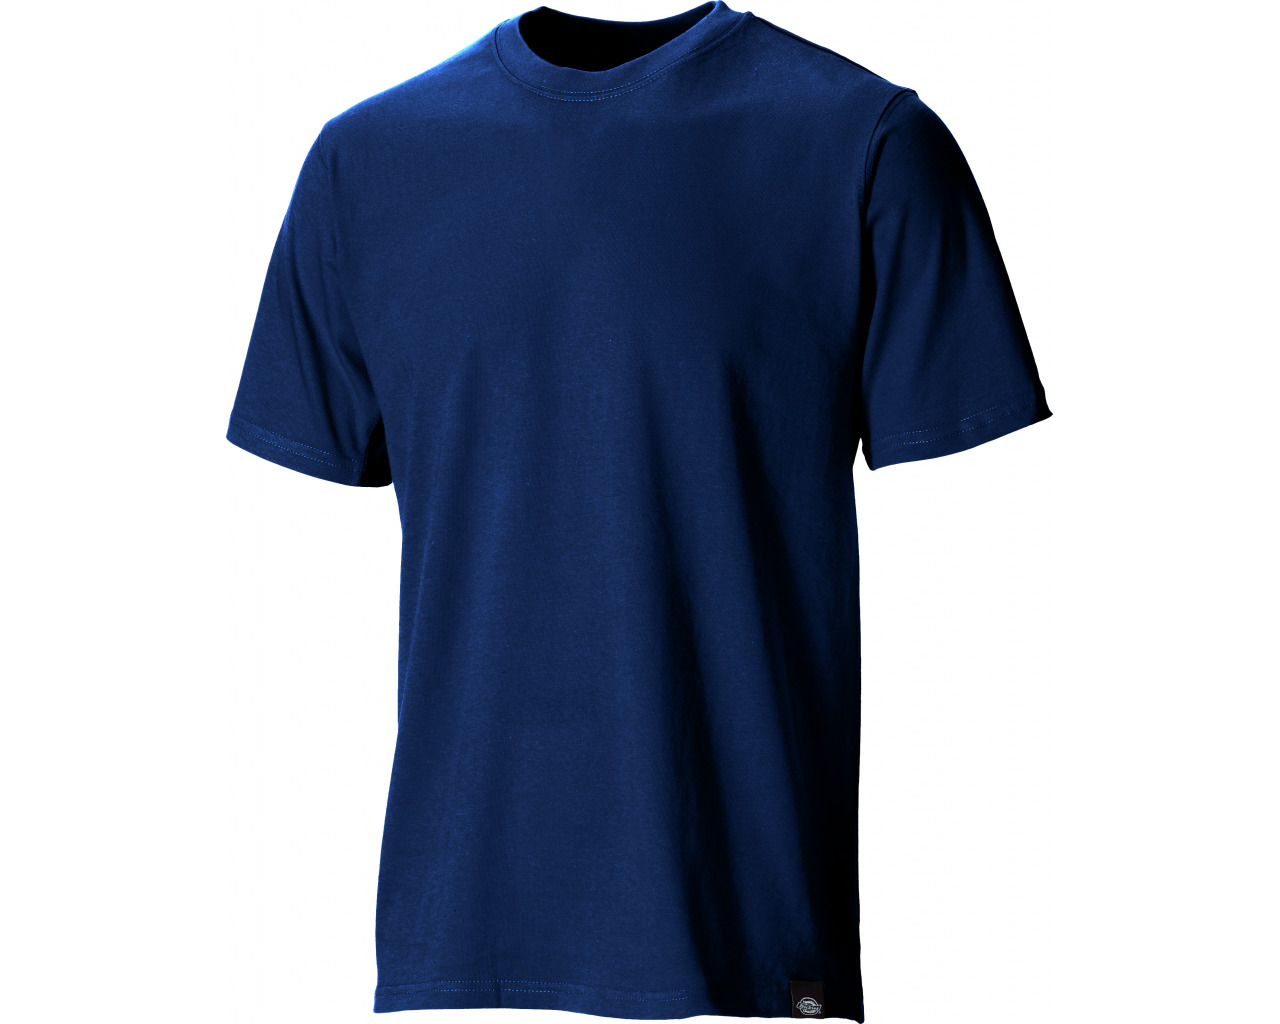 Navy Blue T Shirt Photo Album - Cleida